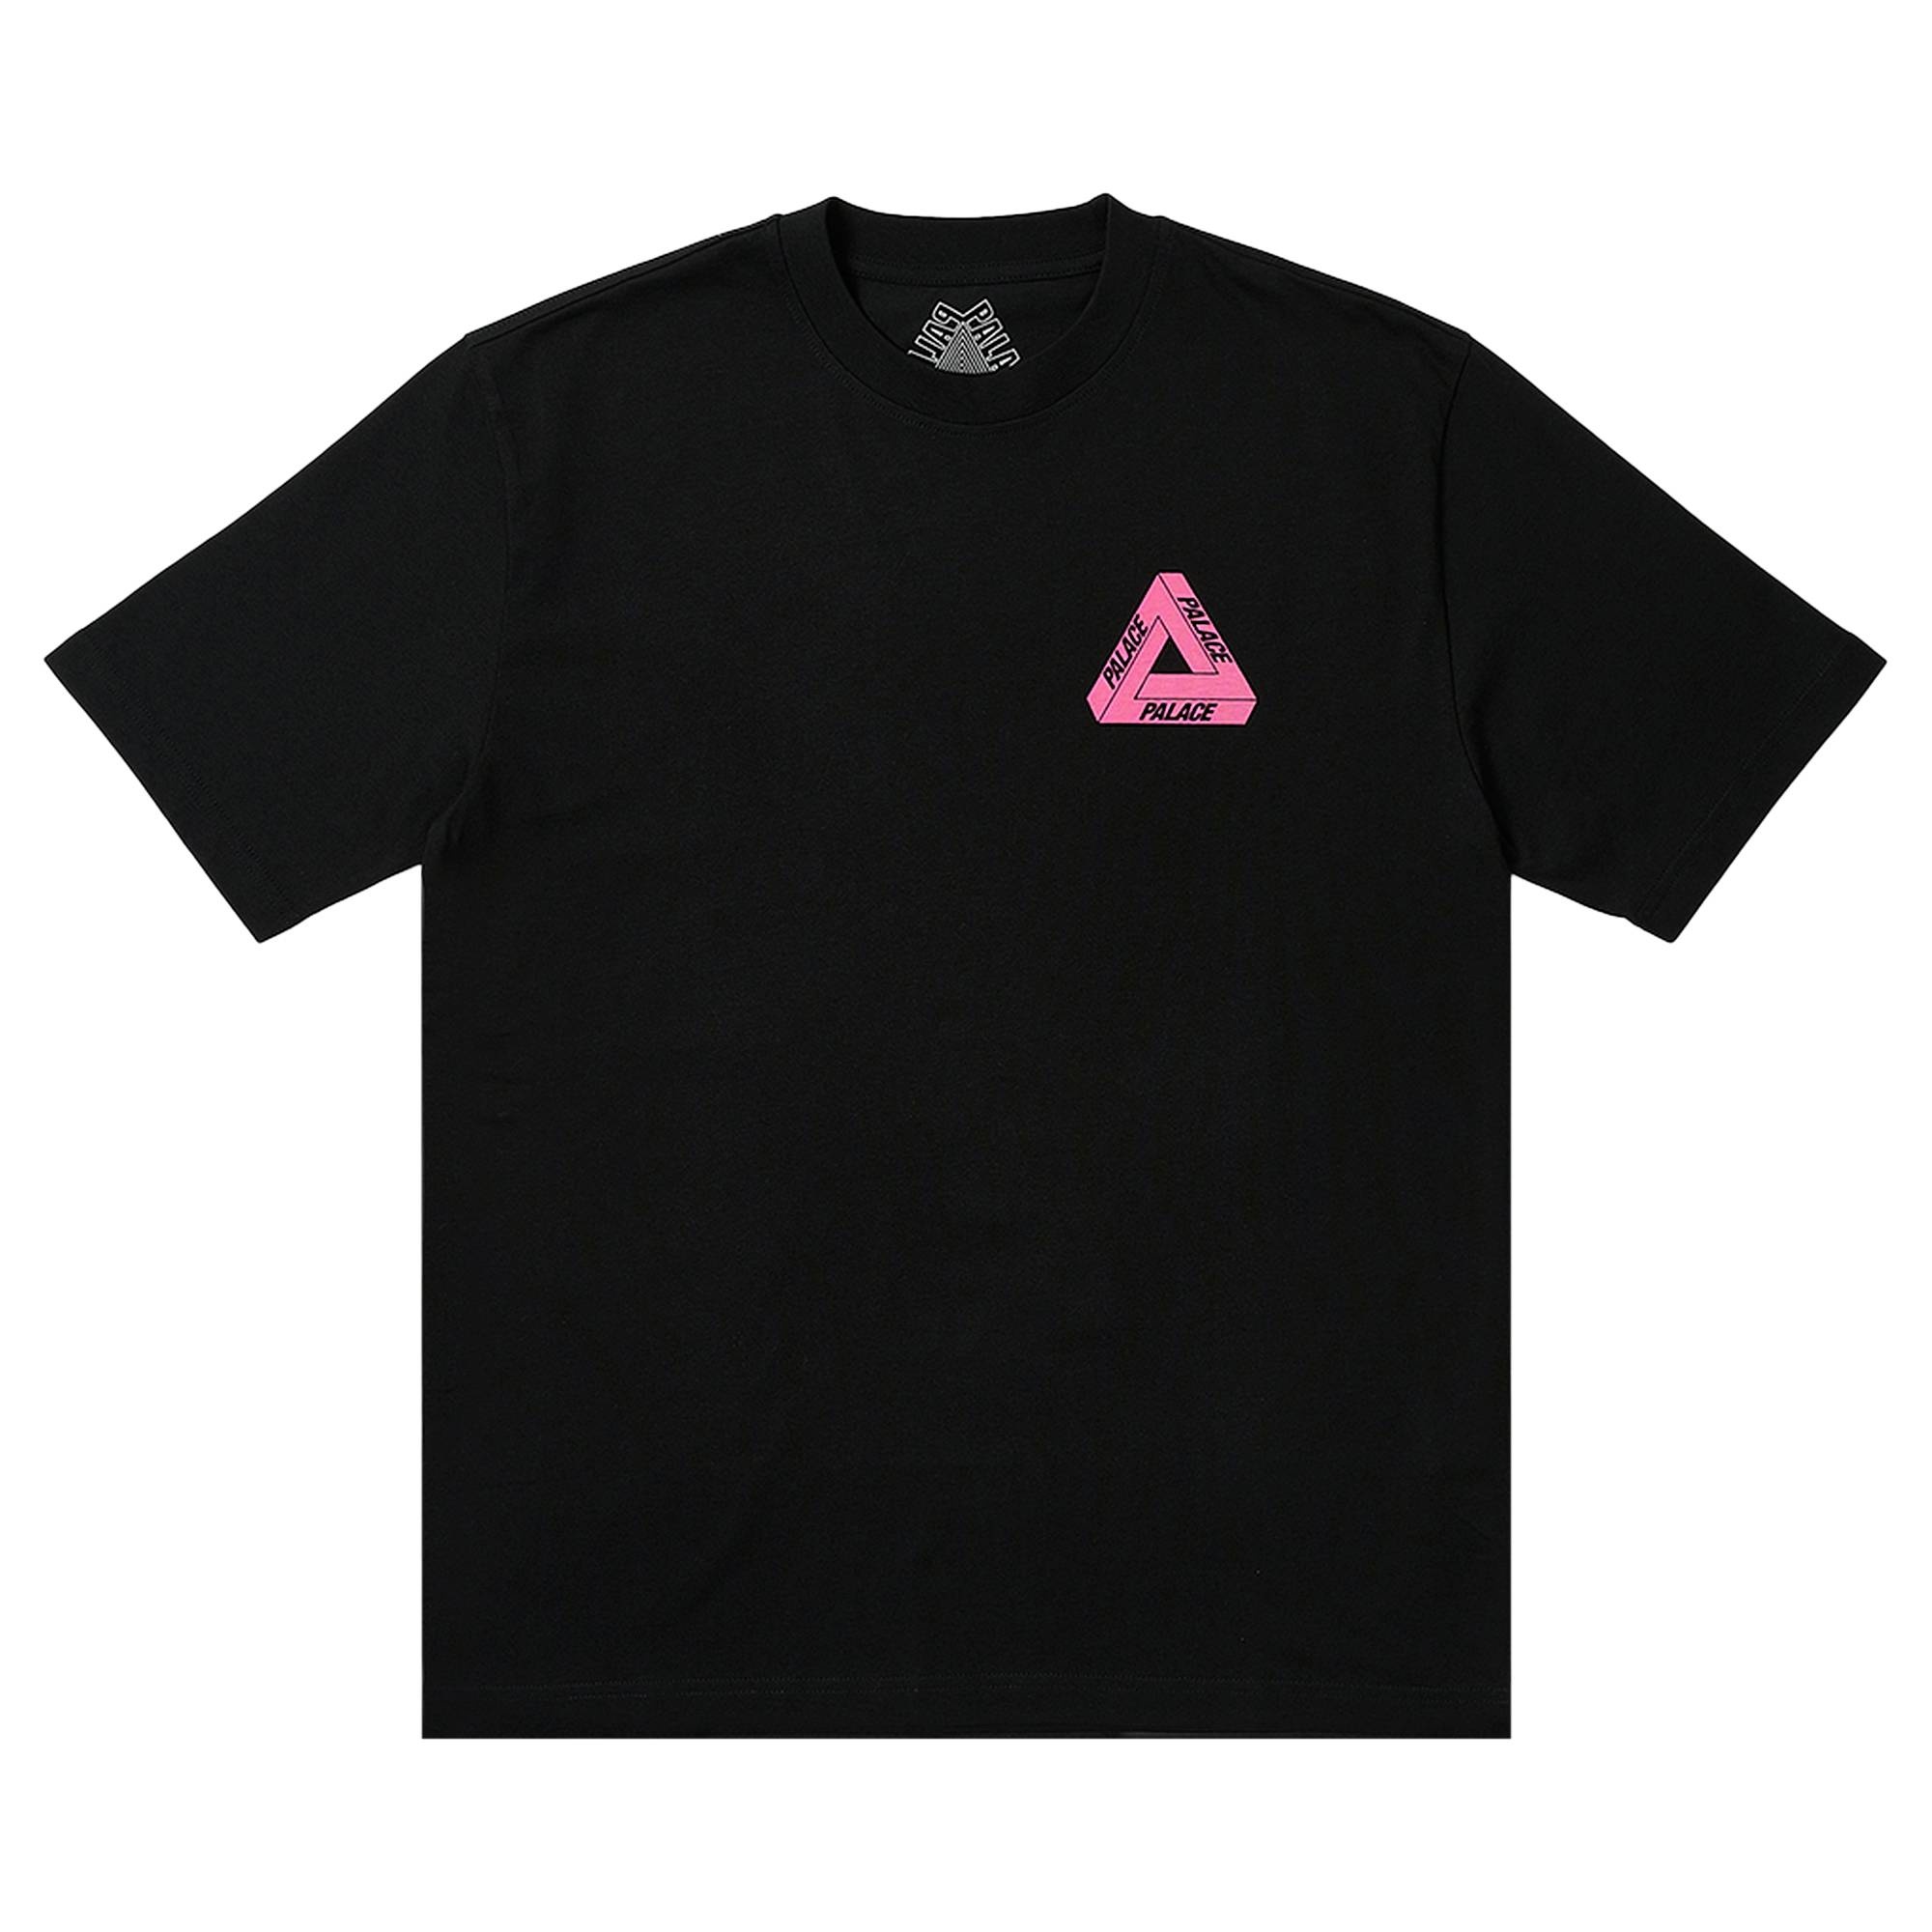 Palace Tri-Twister T-Shirt 'Black' - 1